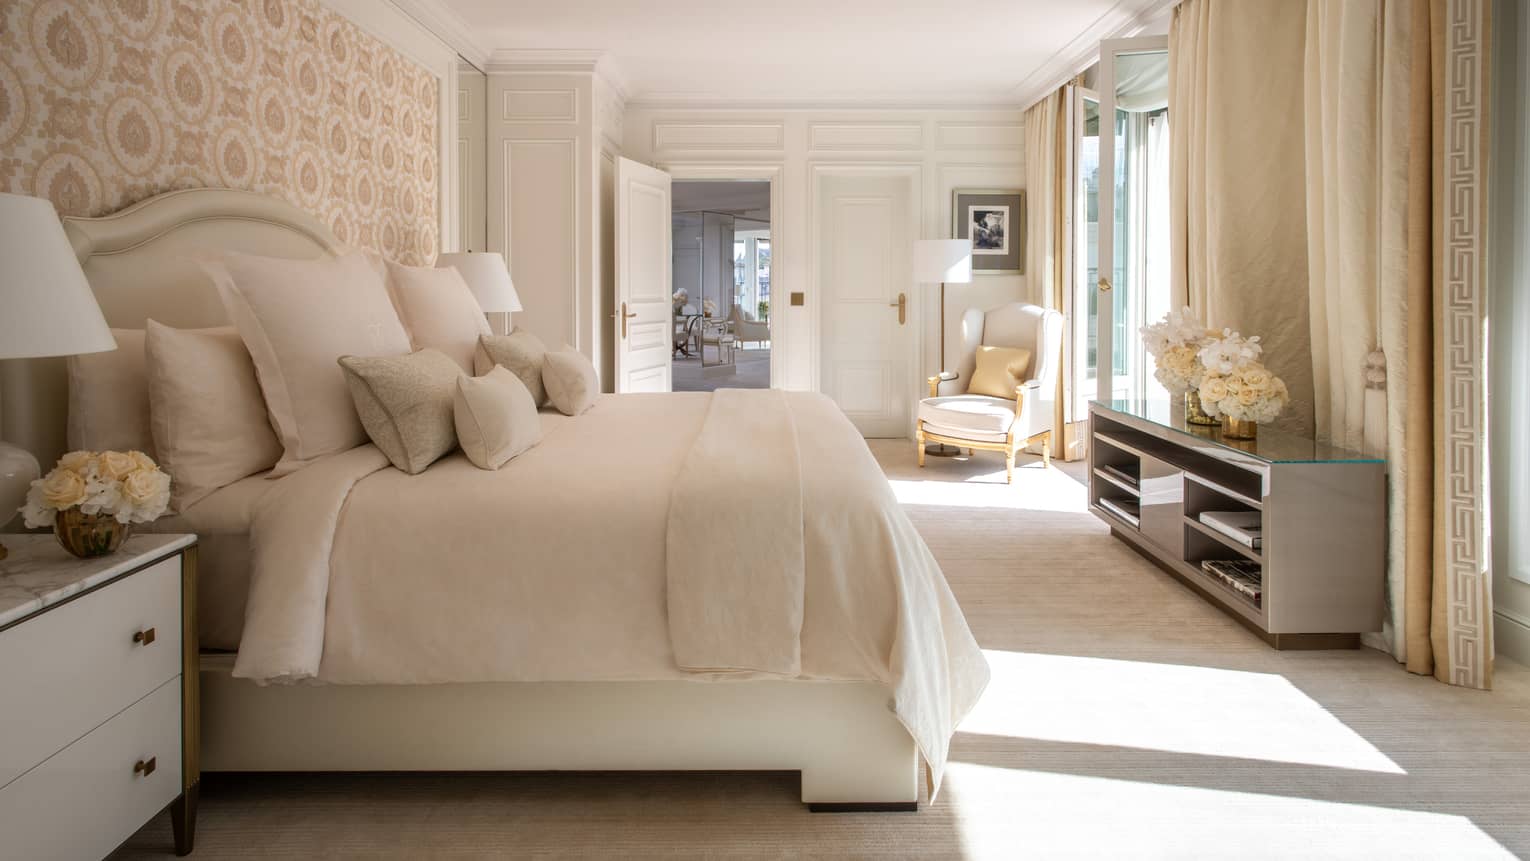 Bedroom with pattern wallpaper, cream bedding and carpet, dresser, windows